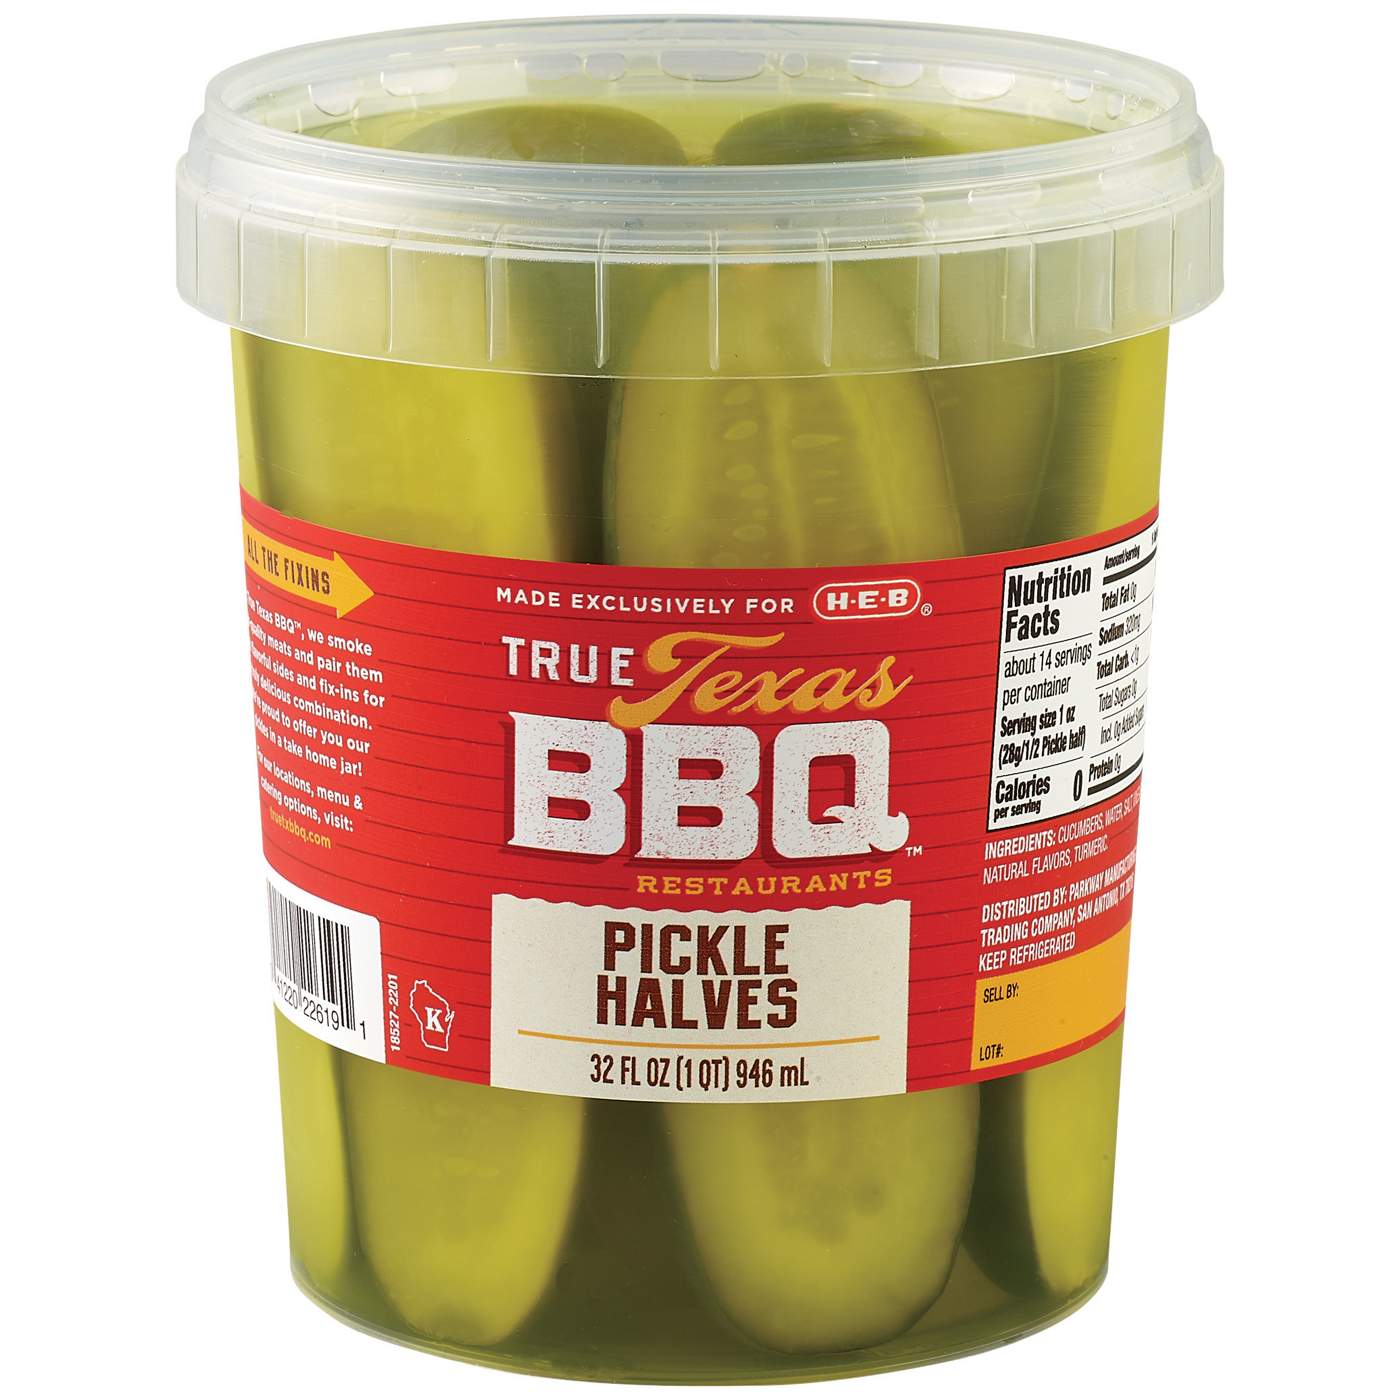 True Texas BBQ Pickle Halves; image 1 of 2